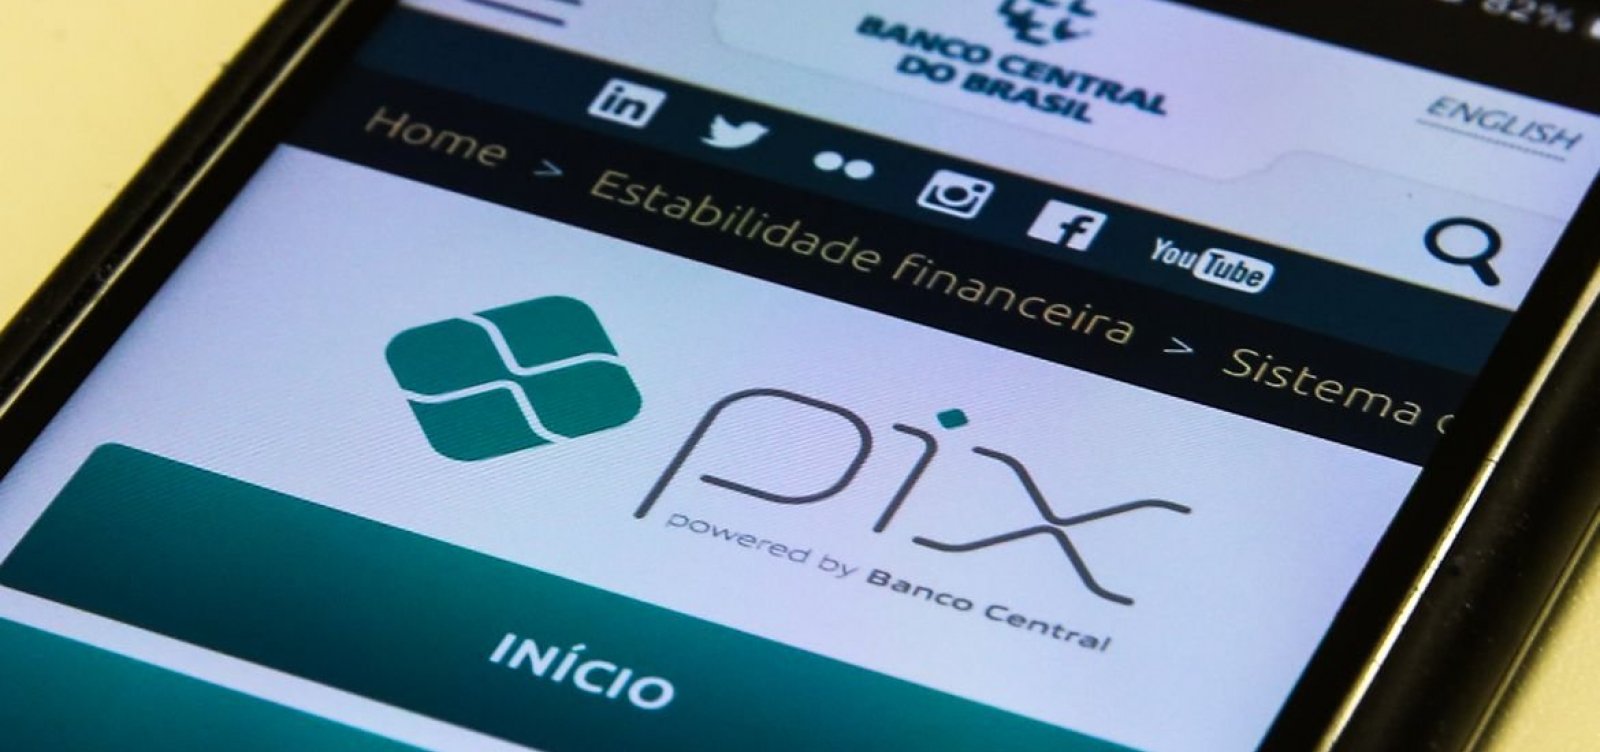 Banco Central estabelece limite de R$ 1 mil para transferências noturnas no Pix